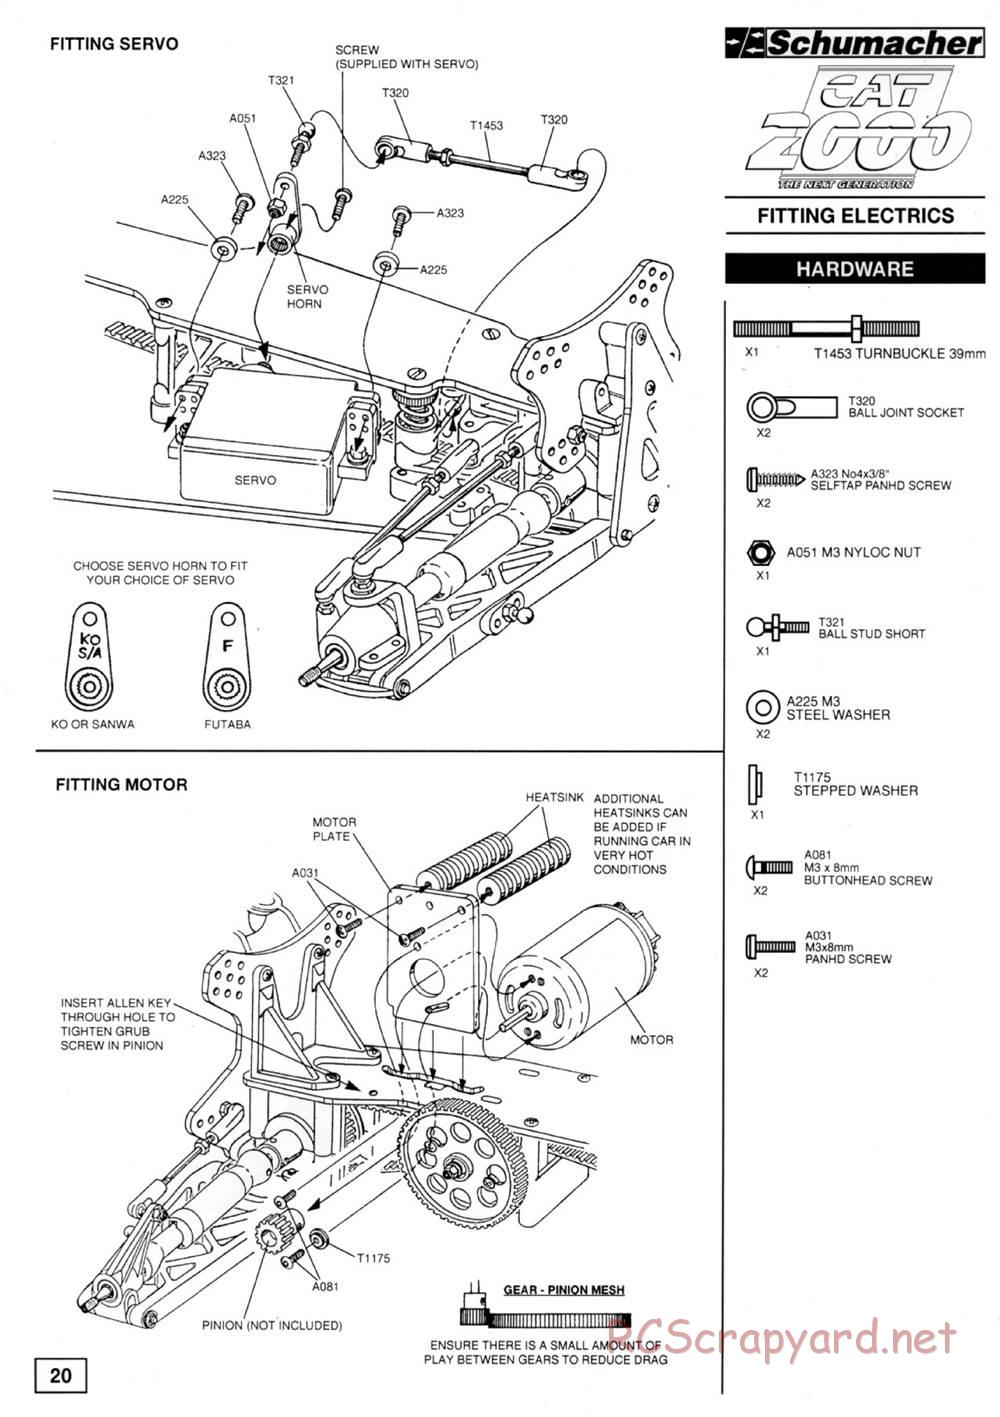 Schumacher - Cat 2000 - Manual - Page 26